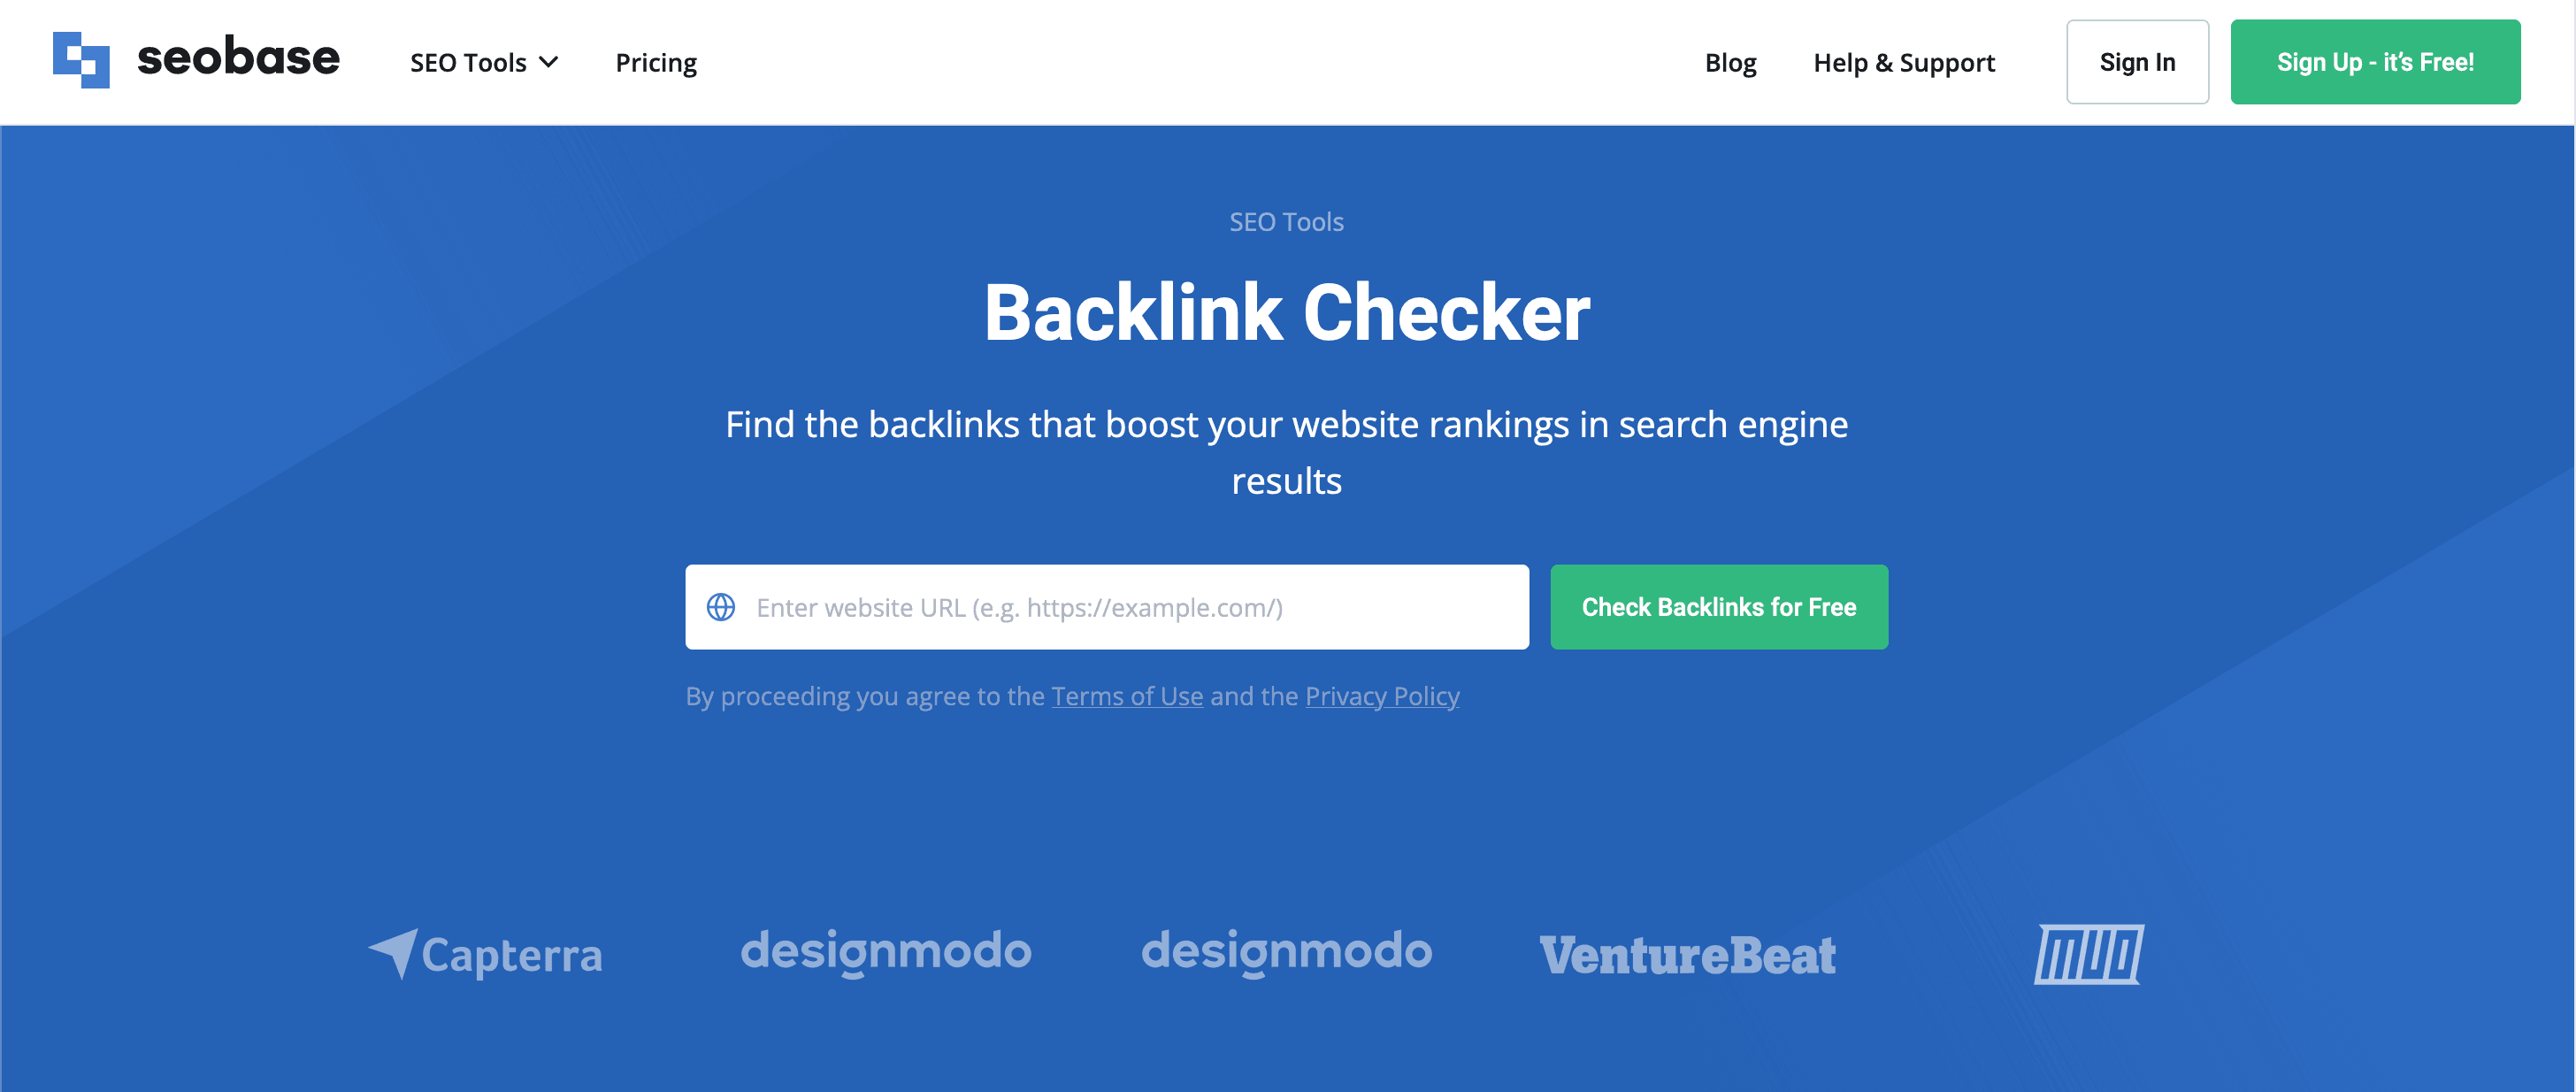 Backlink_Checker_Tool_-_Find_Relevant_Backlinks___seobase___Powerful_SEO_Tools_-_SERP_Checker___Rank_Tracker_-_seobase.png